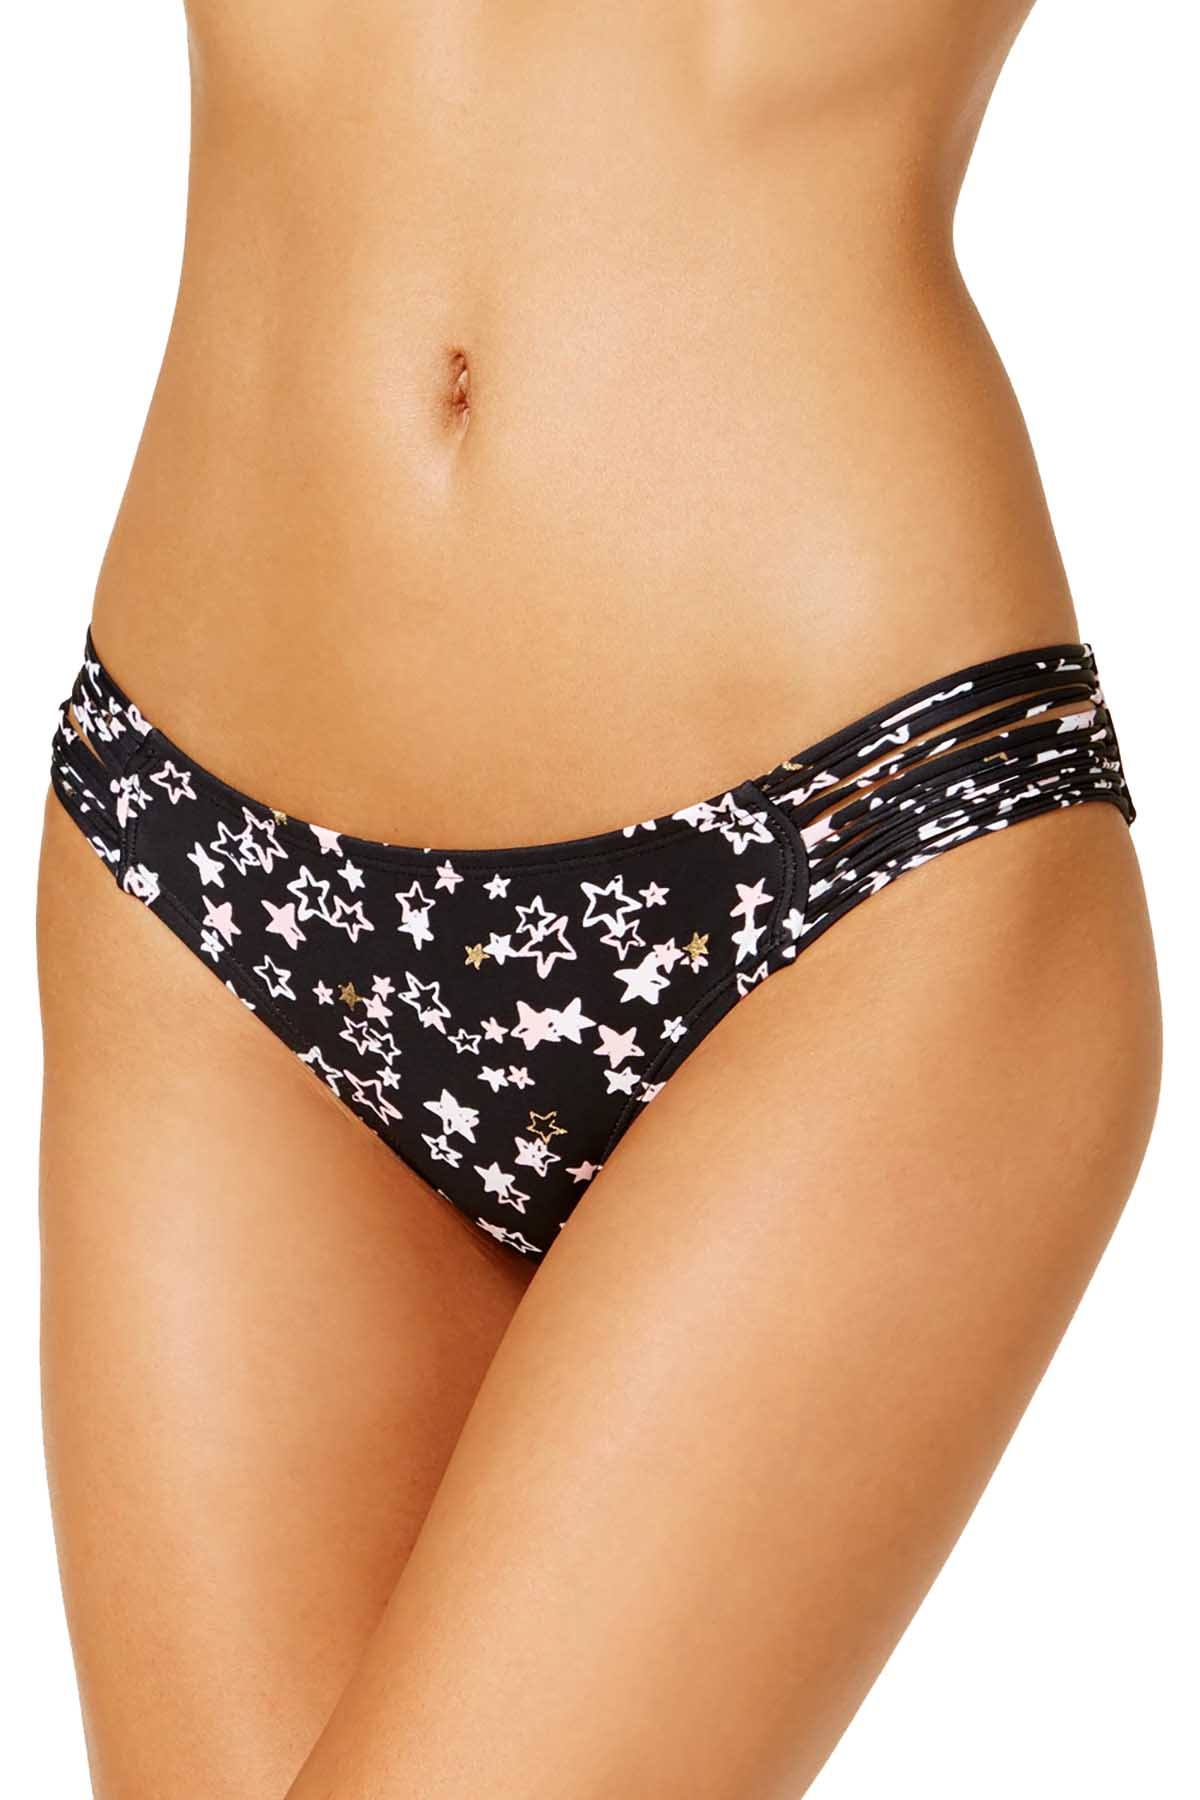 Hula Honey Black Starstruck Printed Strappy Cheeky Bikini Bottom